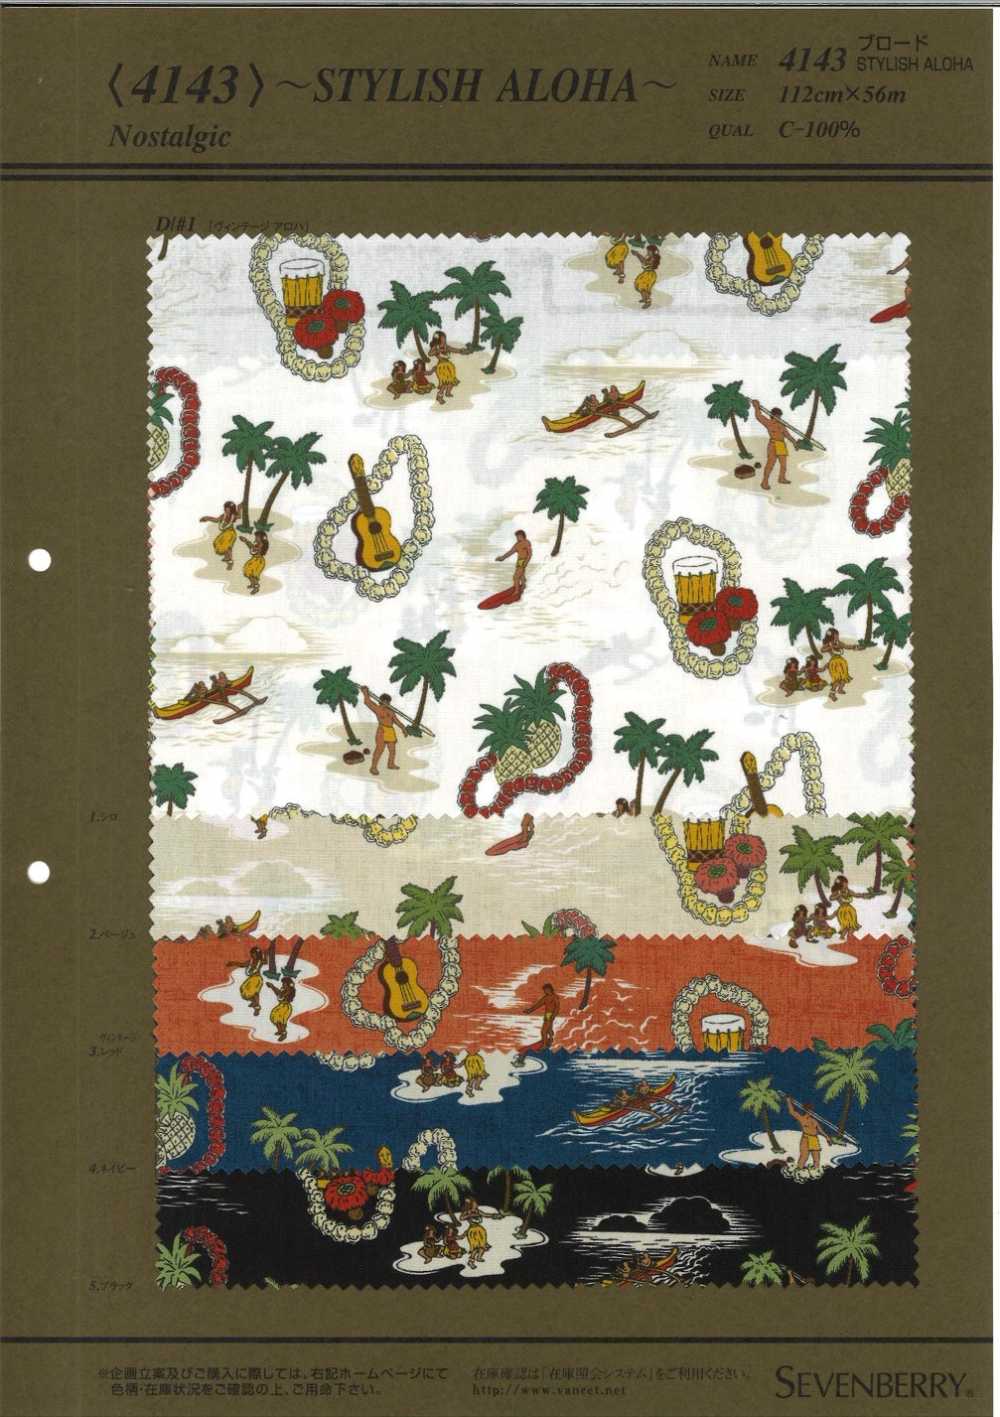 4143 40 Thread Broadcloth STYLISH ALOHA (Nostalgi)[Textile / Fabric] VANCET